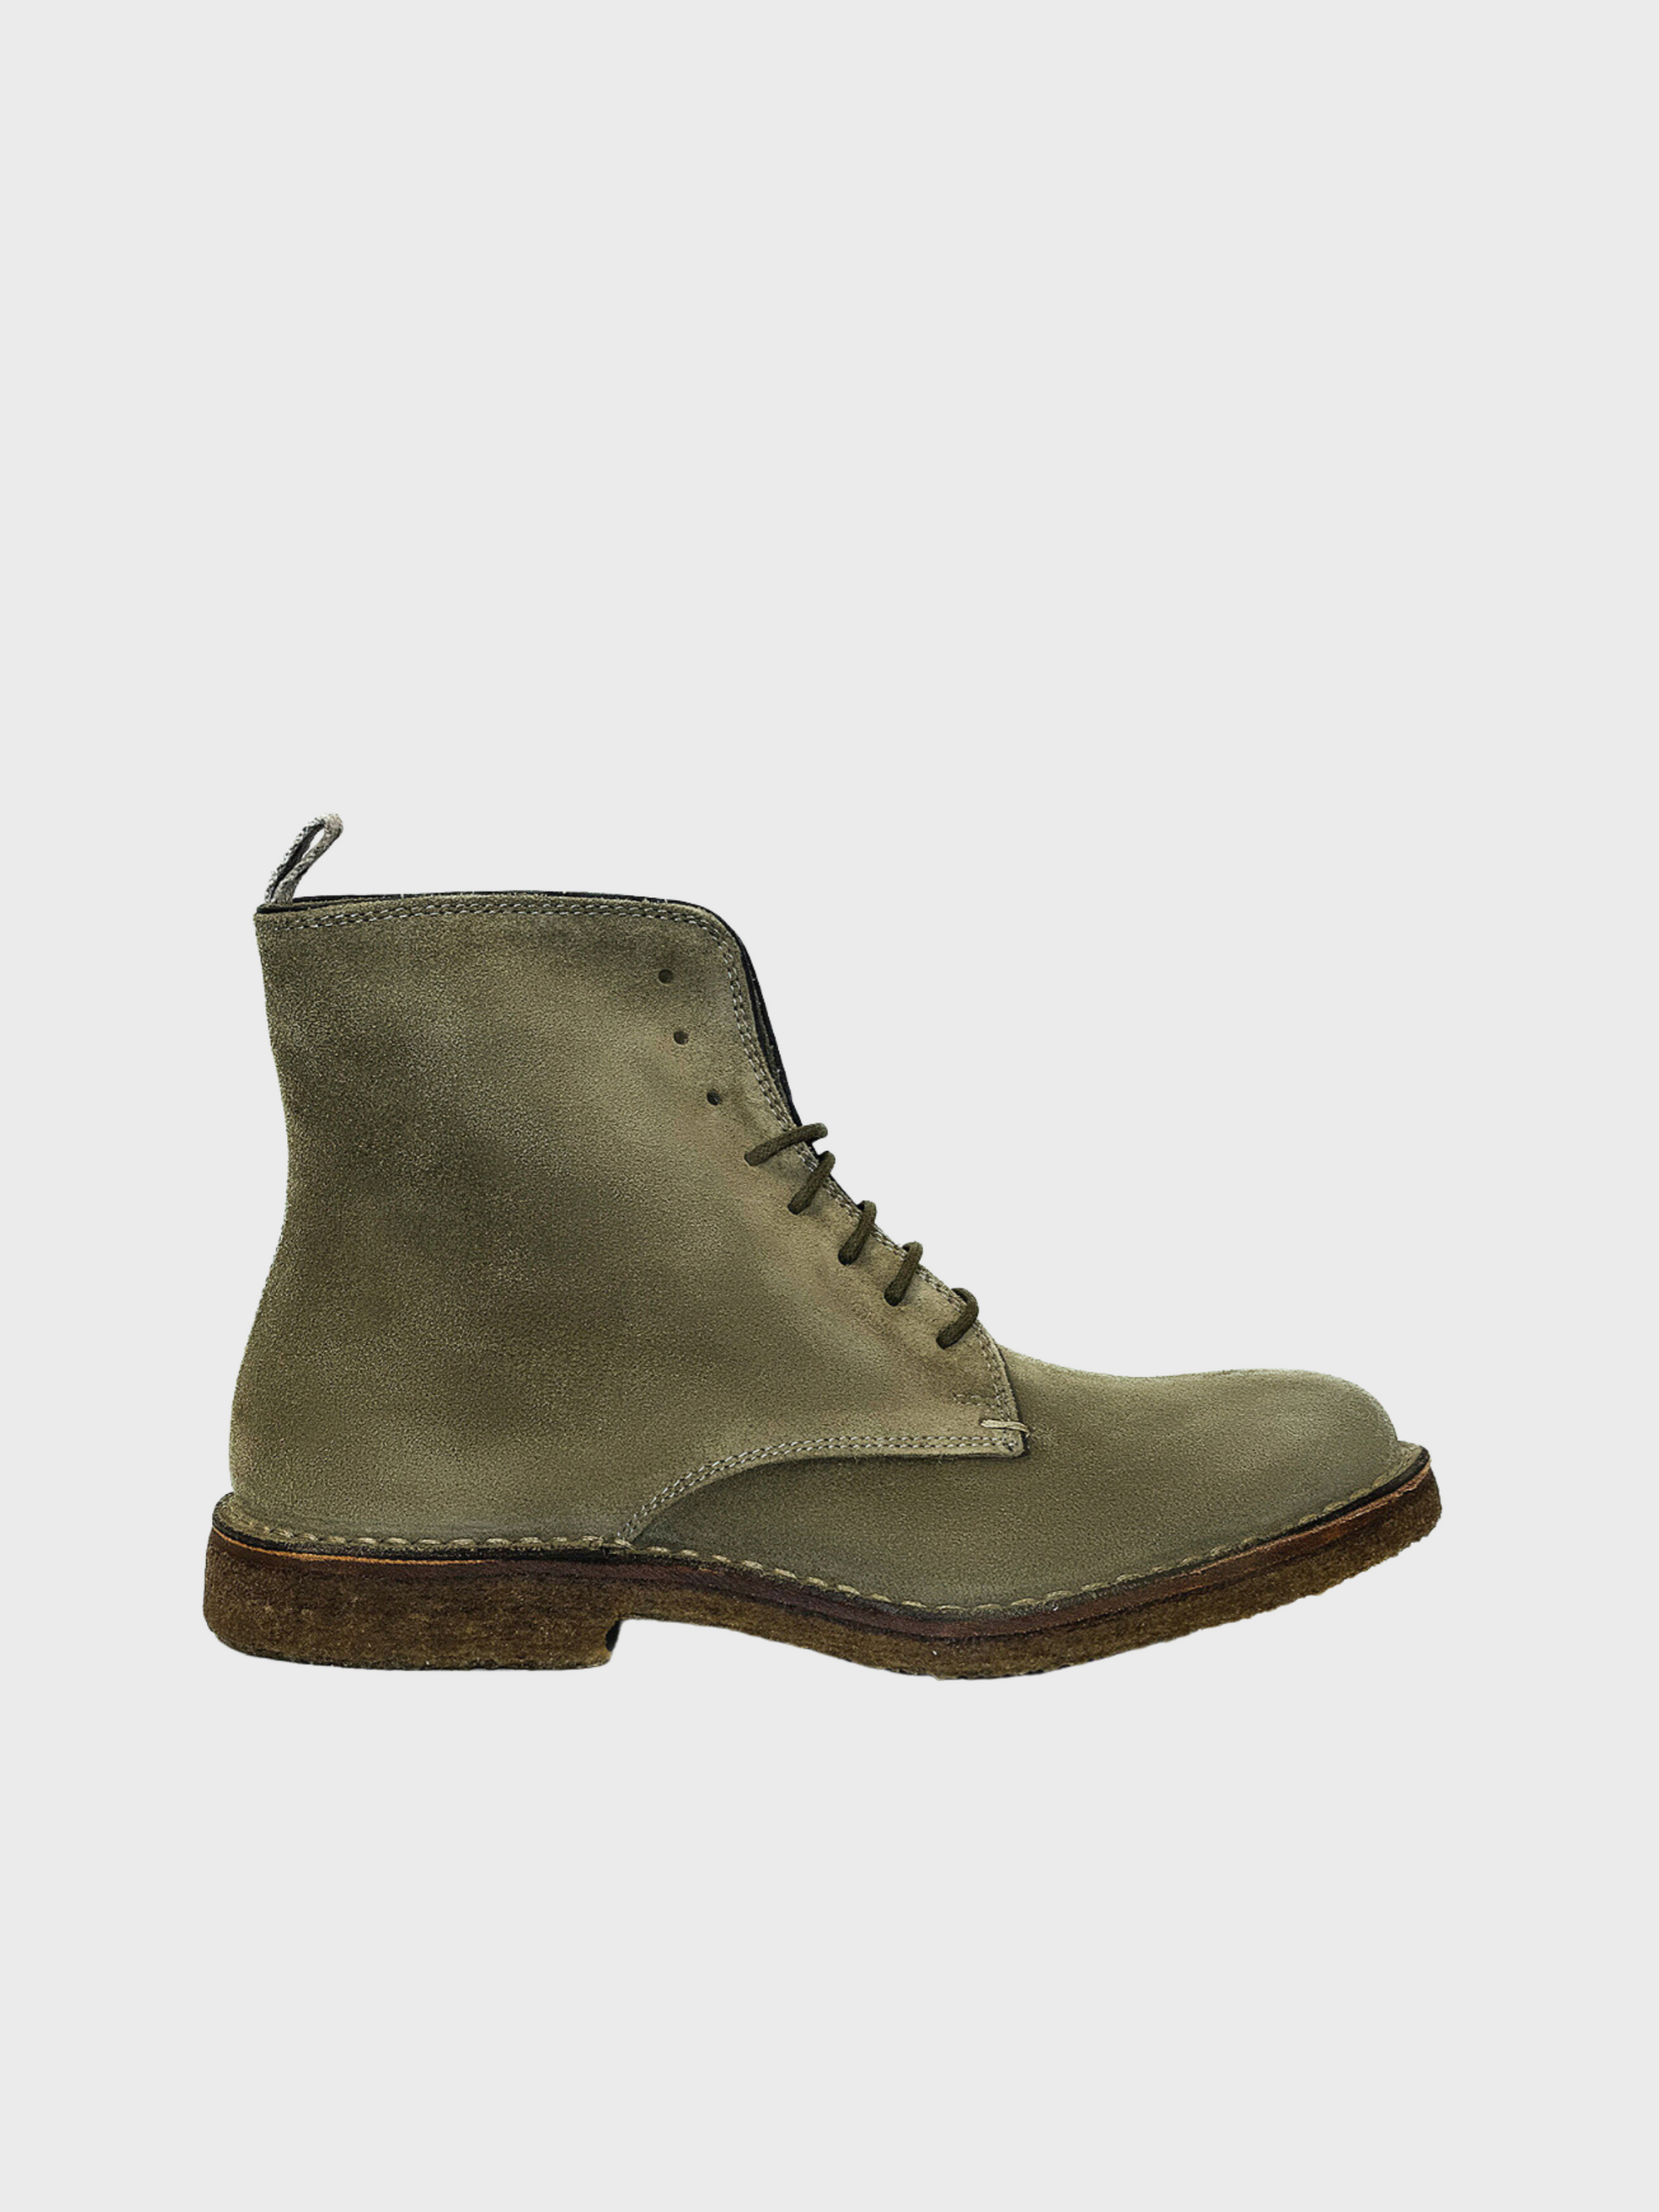 Astorflex-Bootflex 756 Boot-180 FW23-Men's Shoes-7-Yaletown-Vancouver-Surrey-Canada